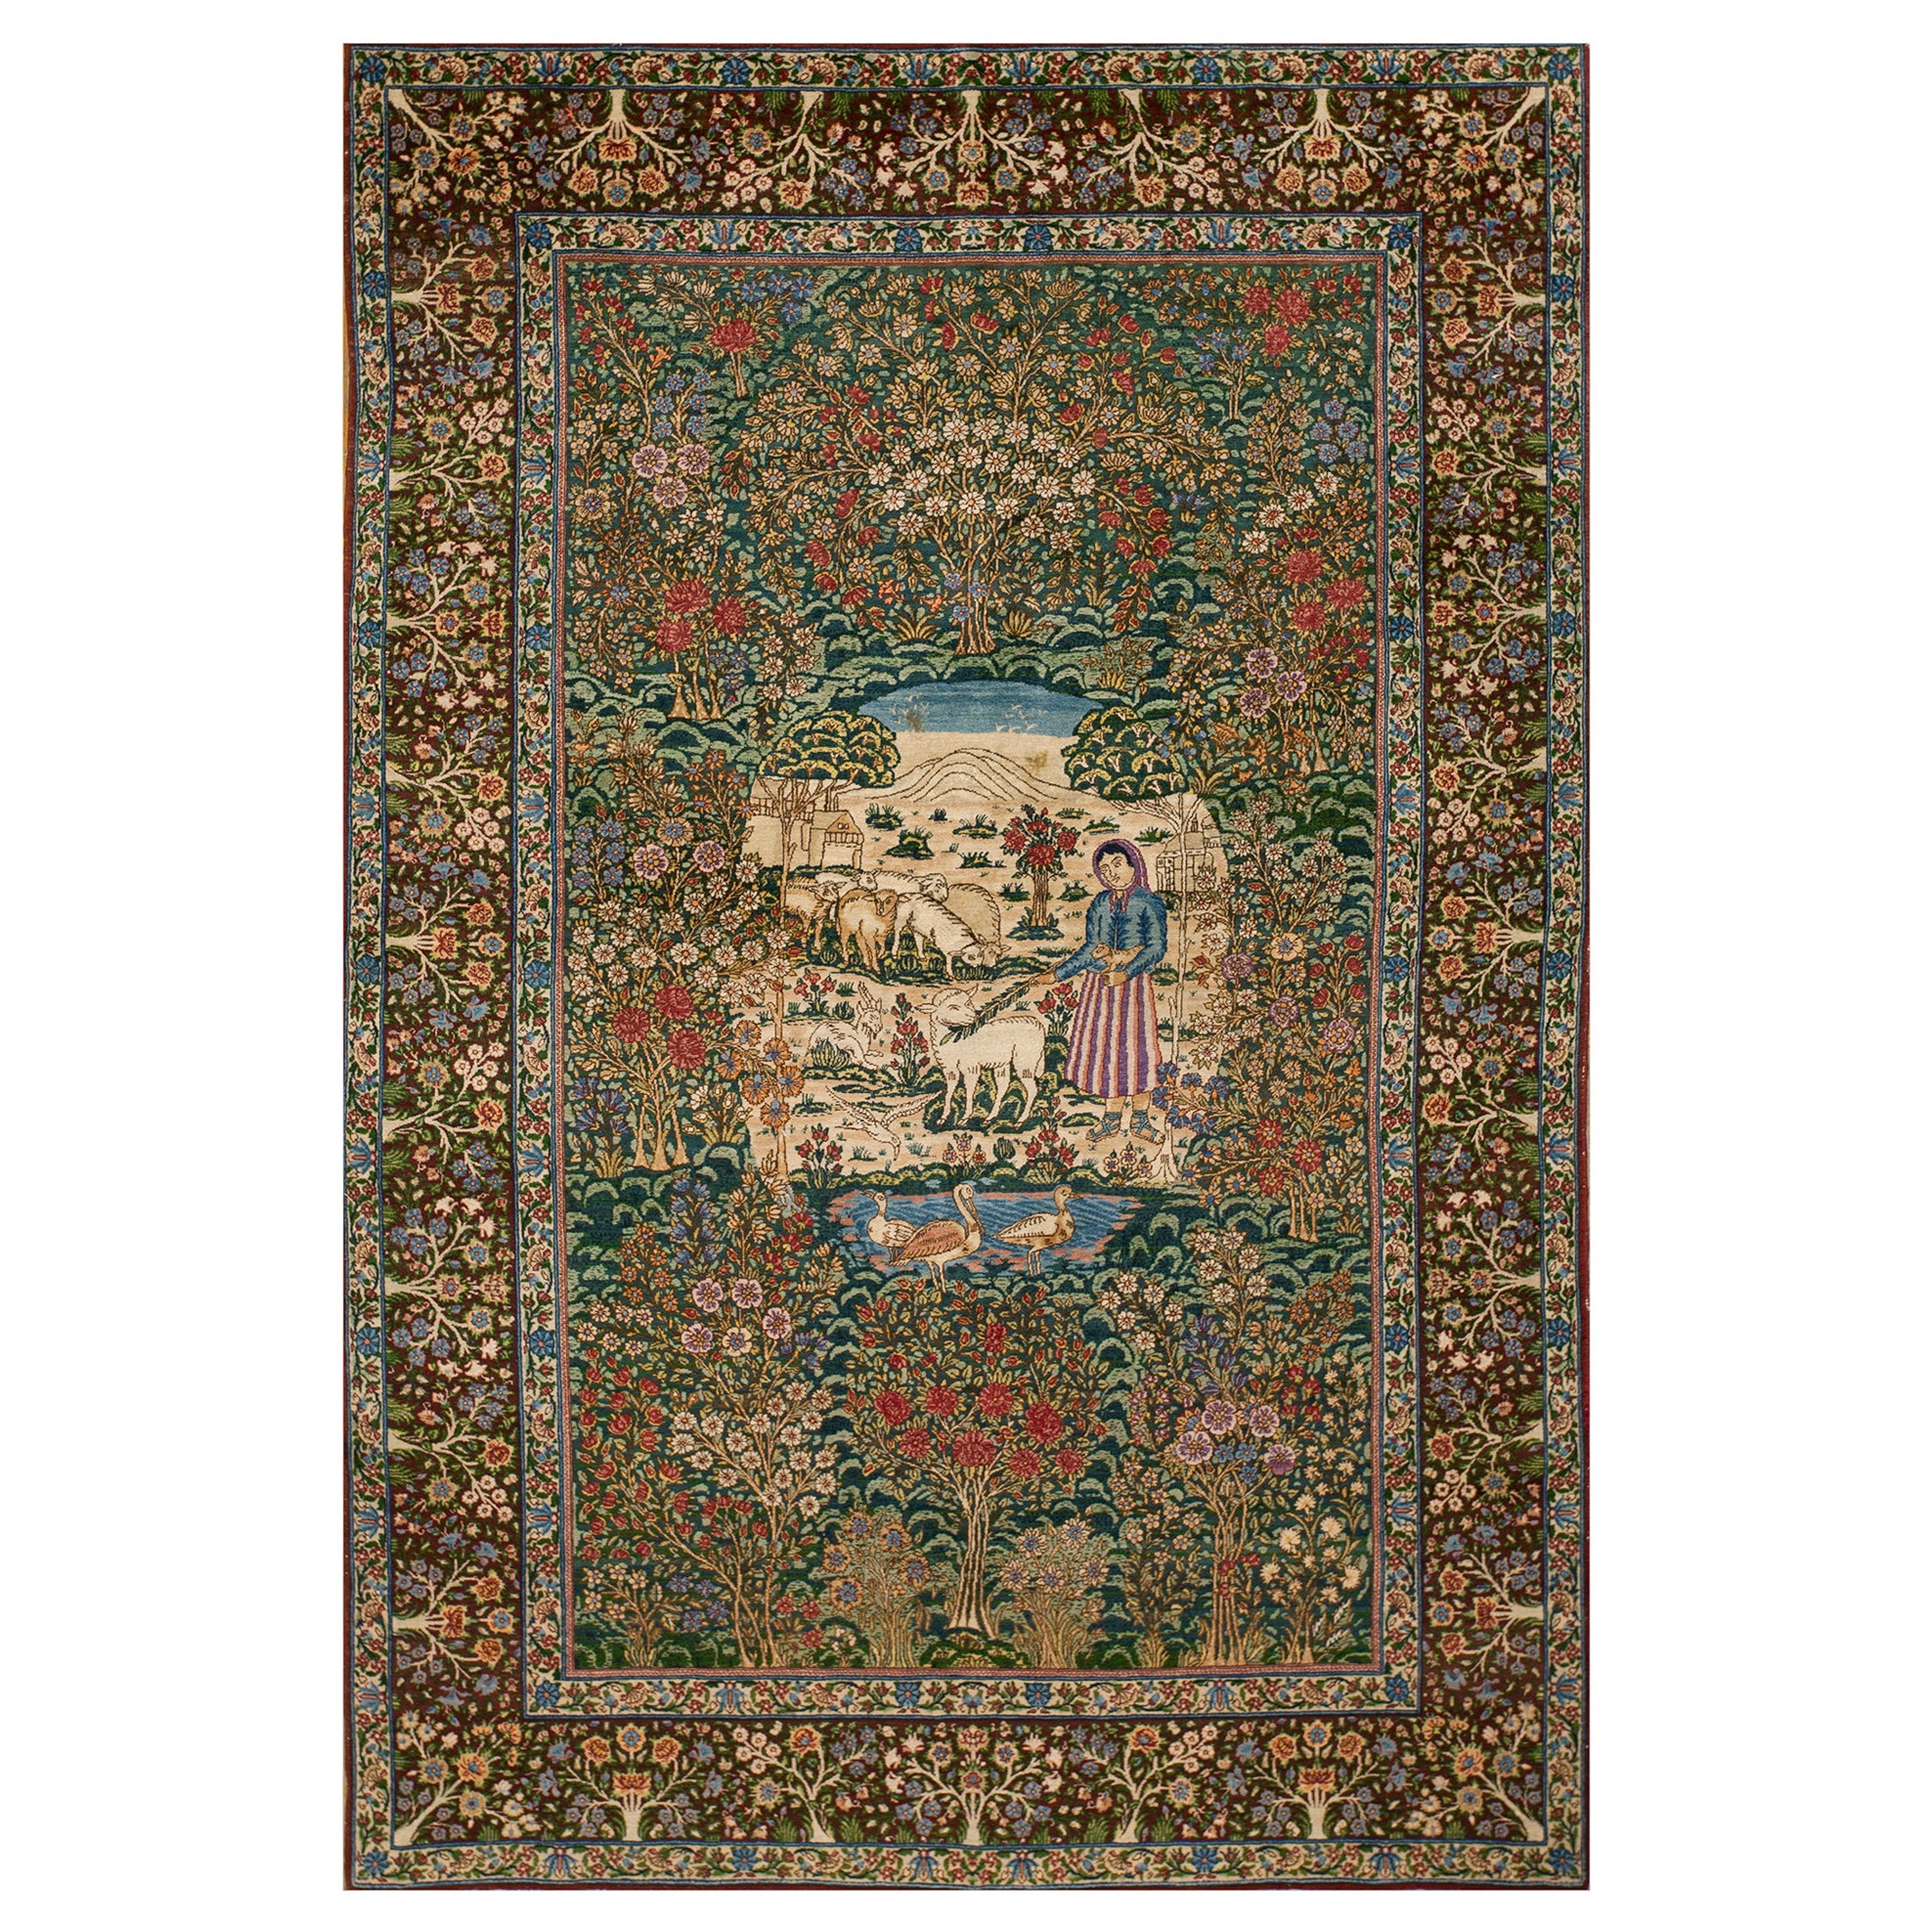 Early 20th Century Persian Kirman Carpet ( 4'10" x 7'9" - 147 x 236 )